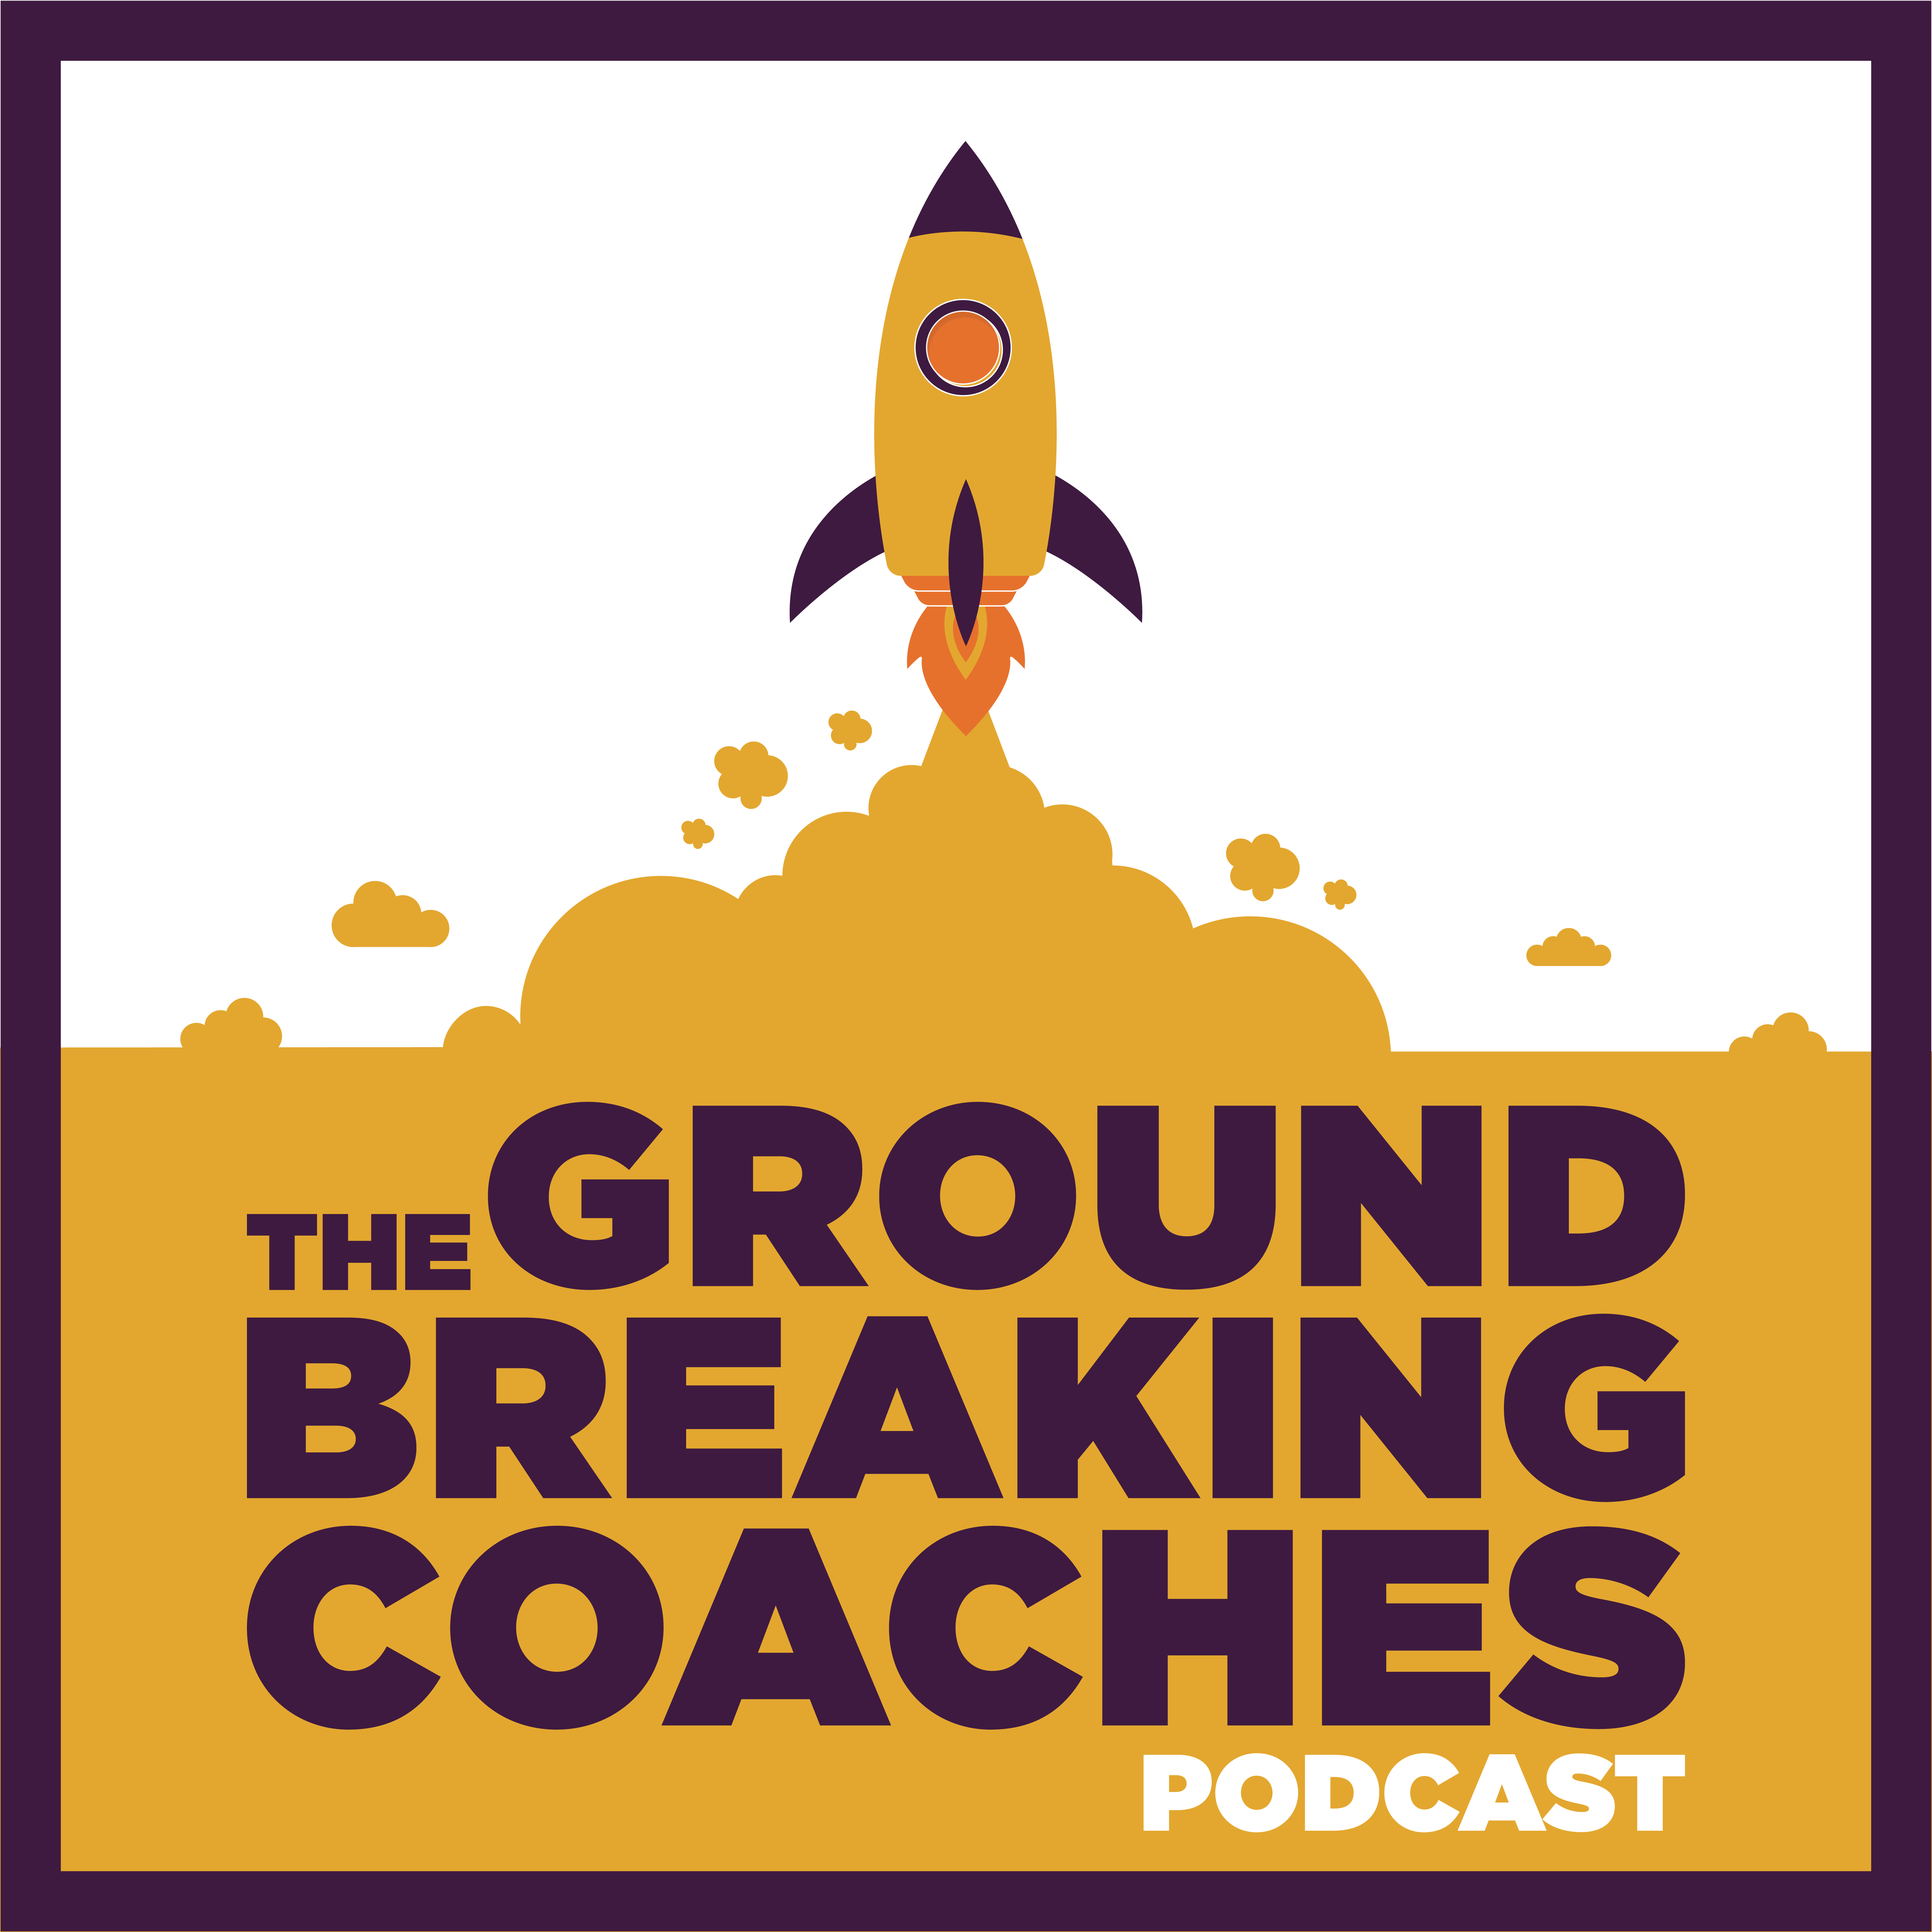 The GroundBreaking Coaches Podcast Host, Josh Zepess